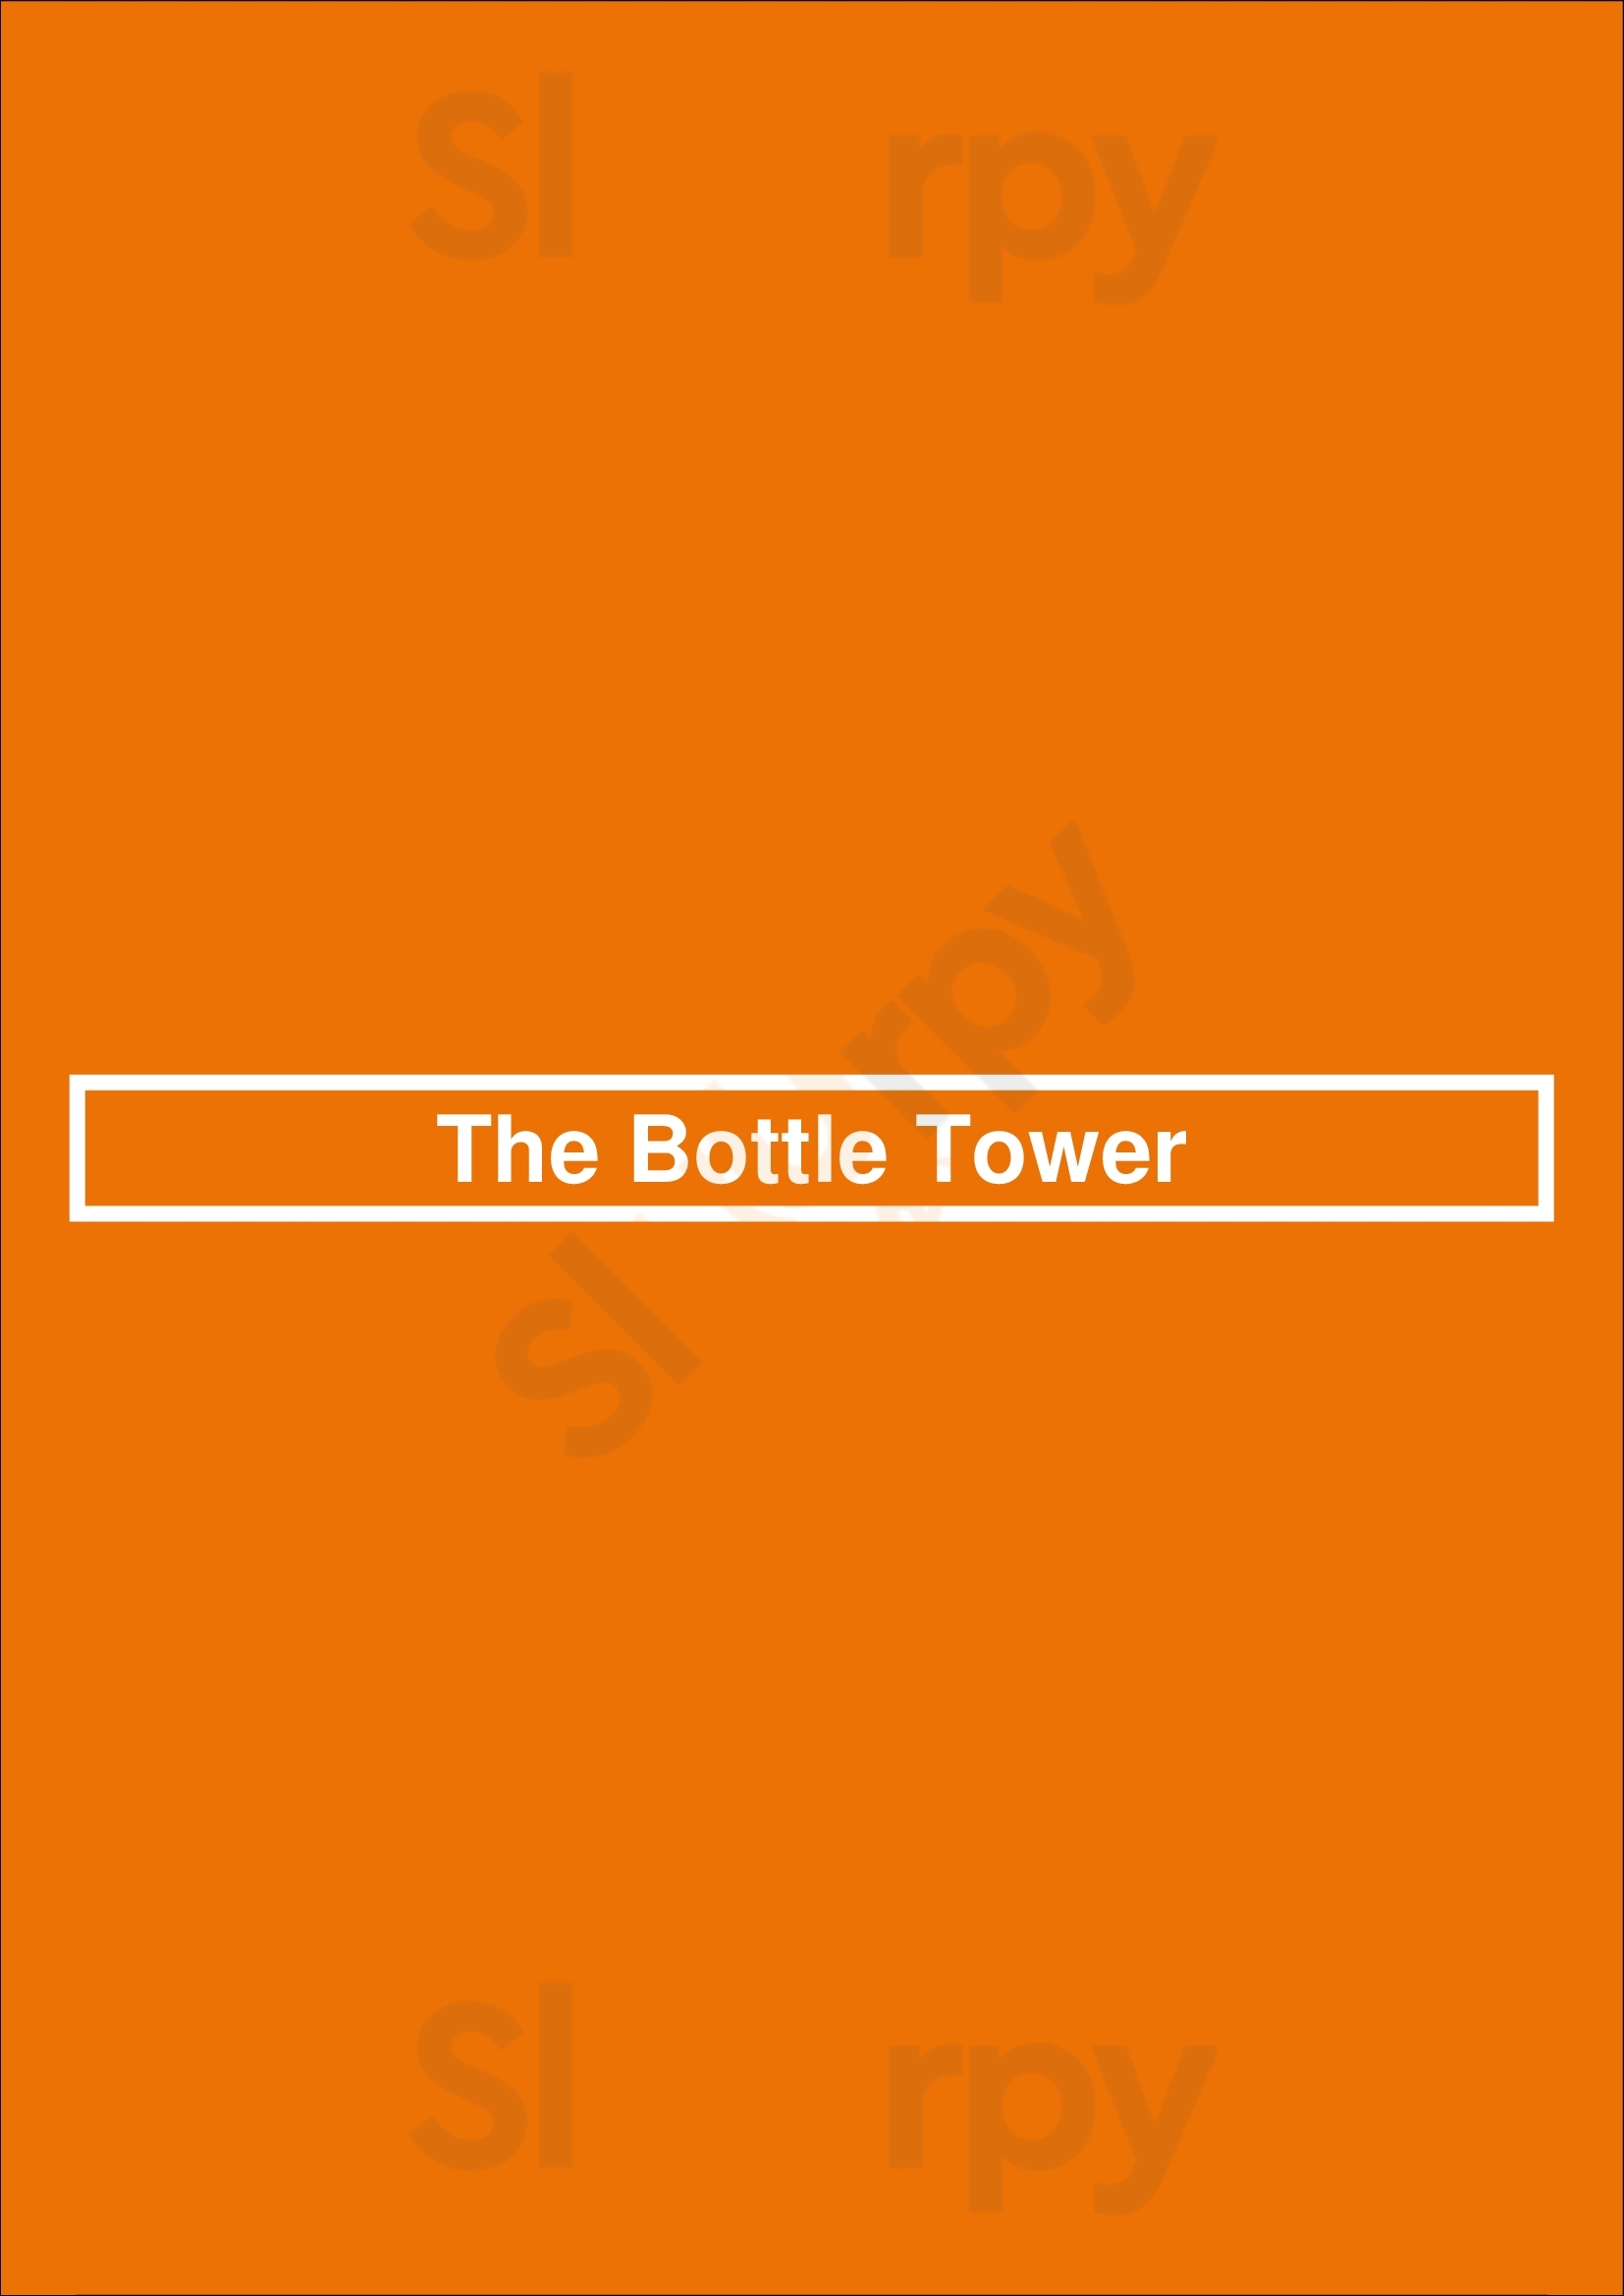 The Bottle Tower - Beer & Food Co Dublin Menu - 1